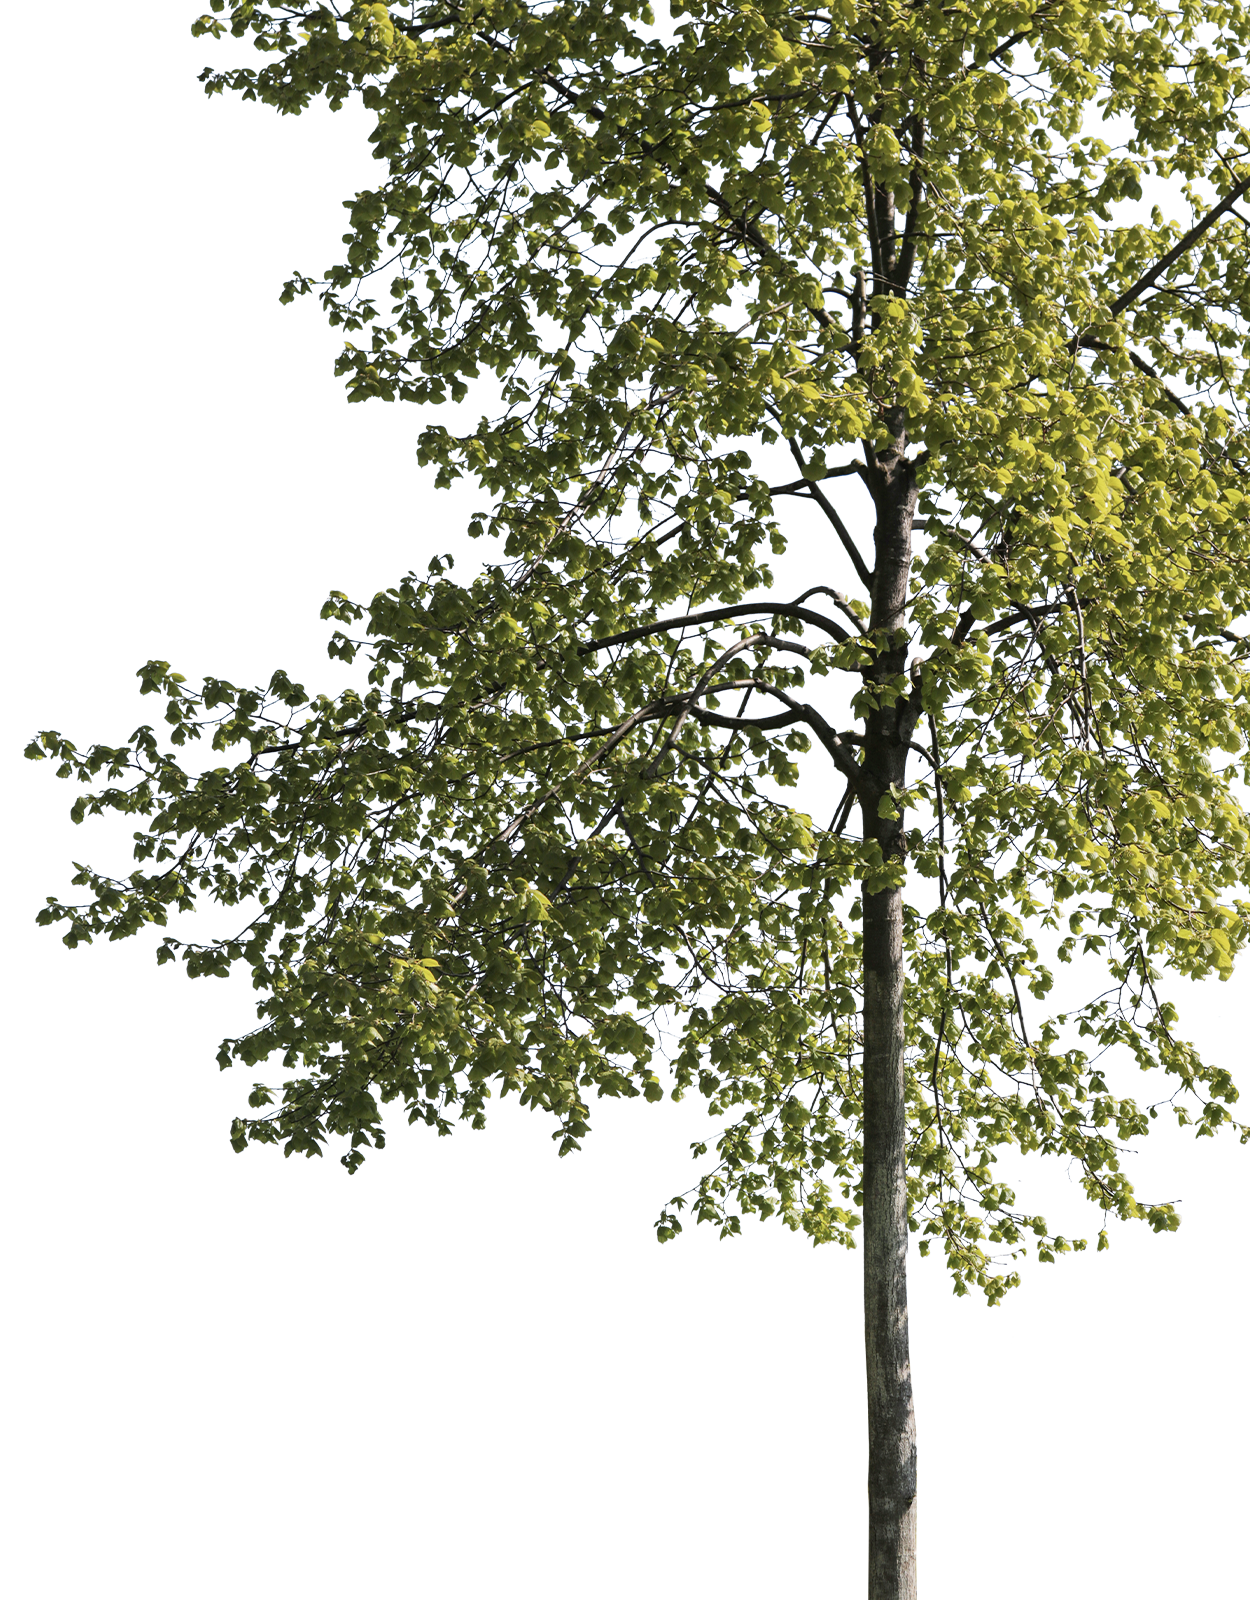 Tilia cordata m01 - cutout trees